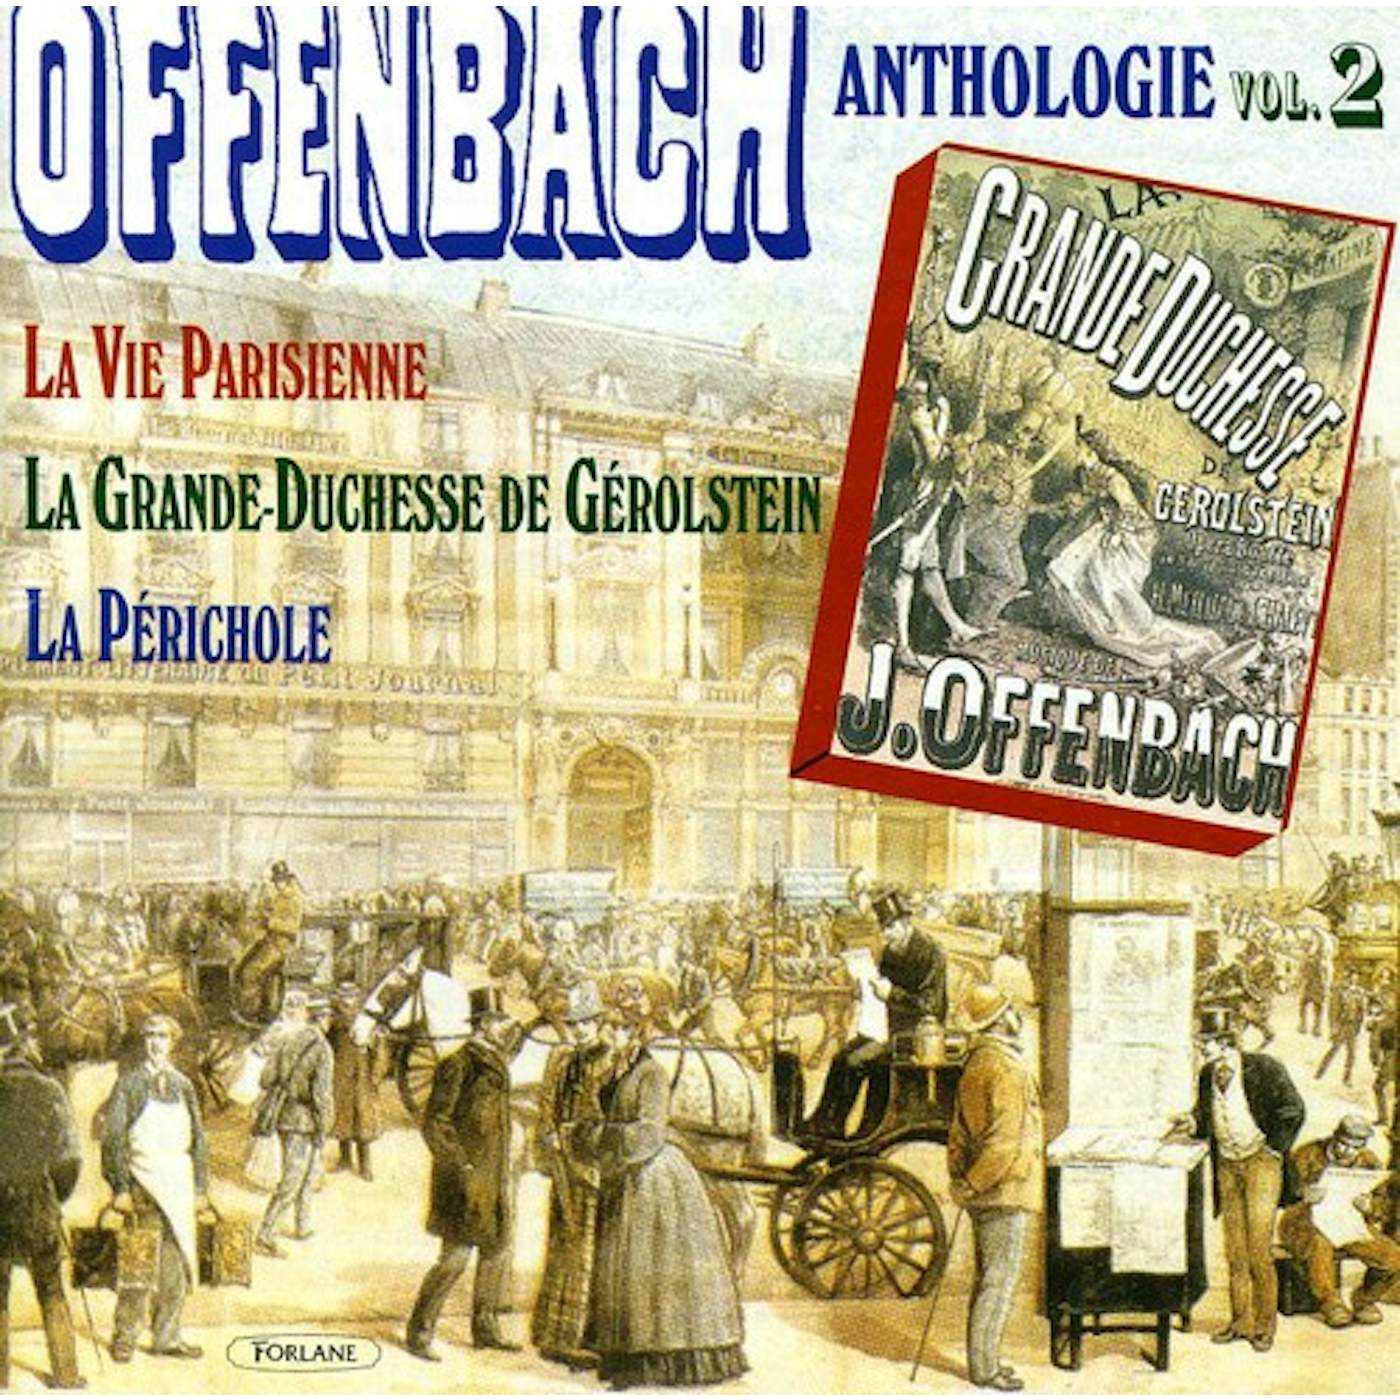 Jacques Offenbach VOL. 2-ANTHOLOGIE CD